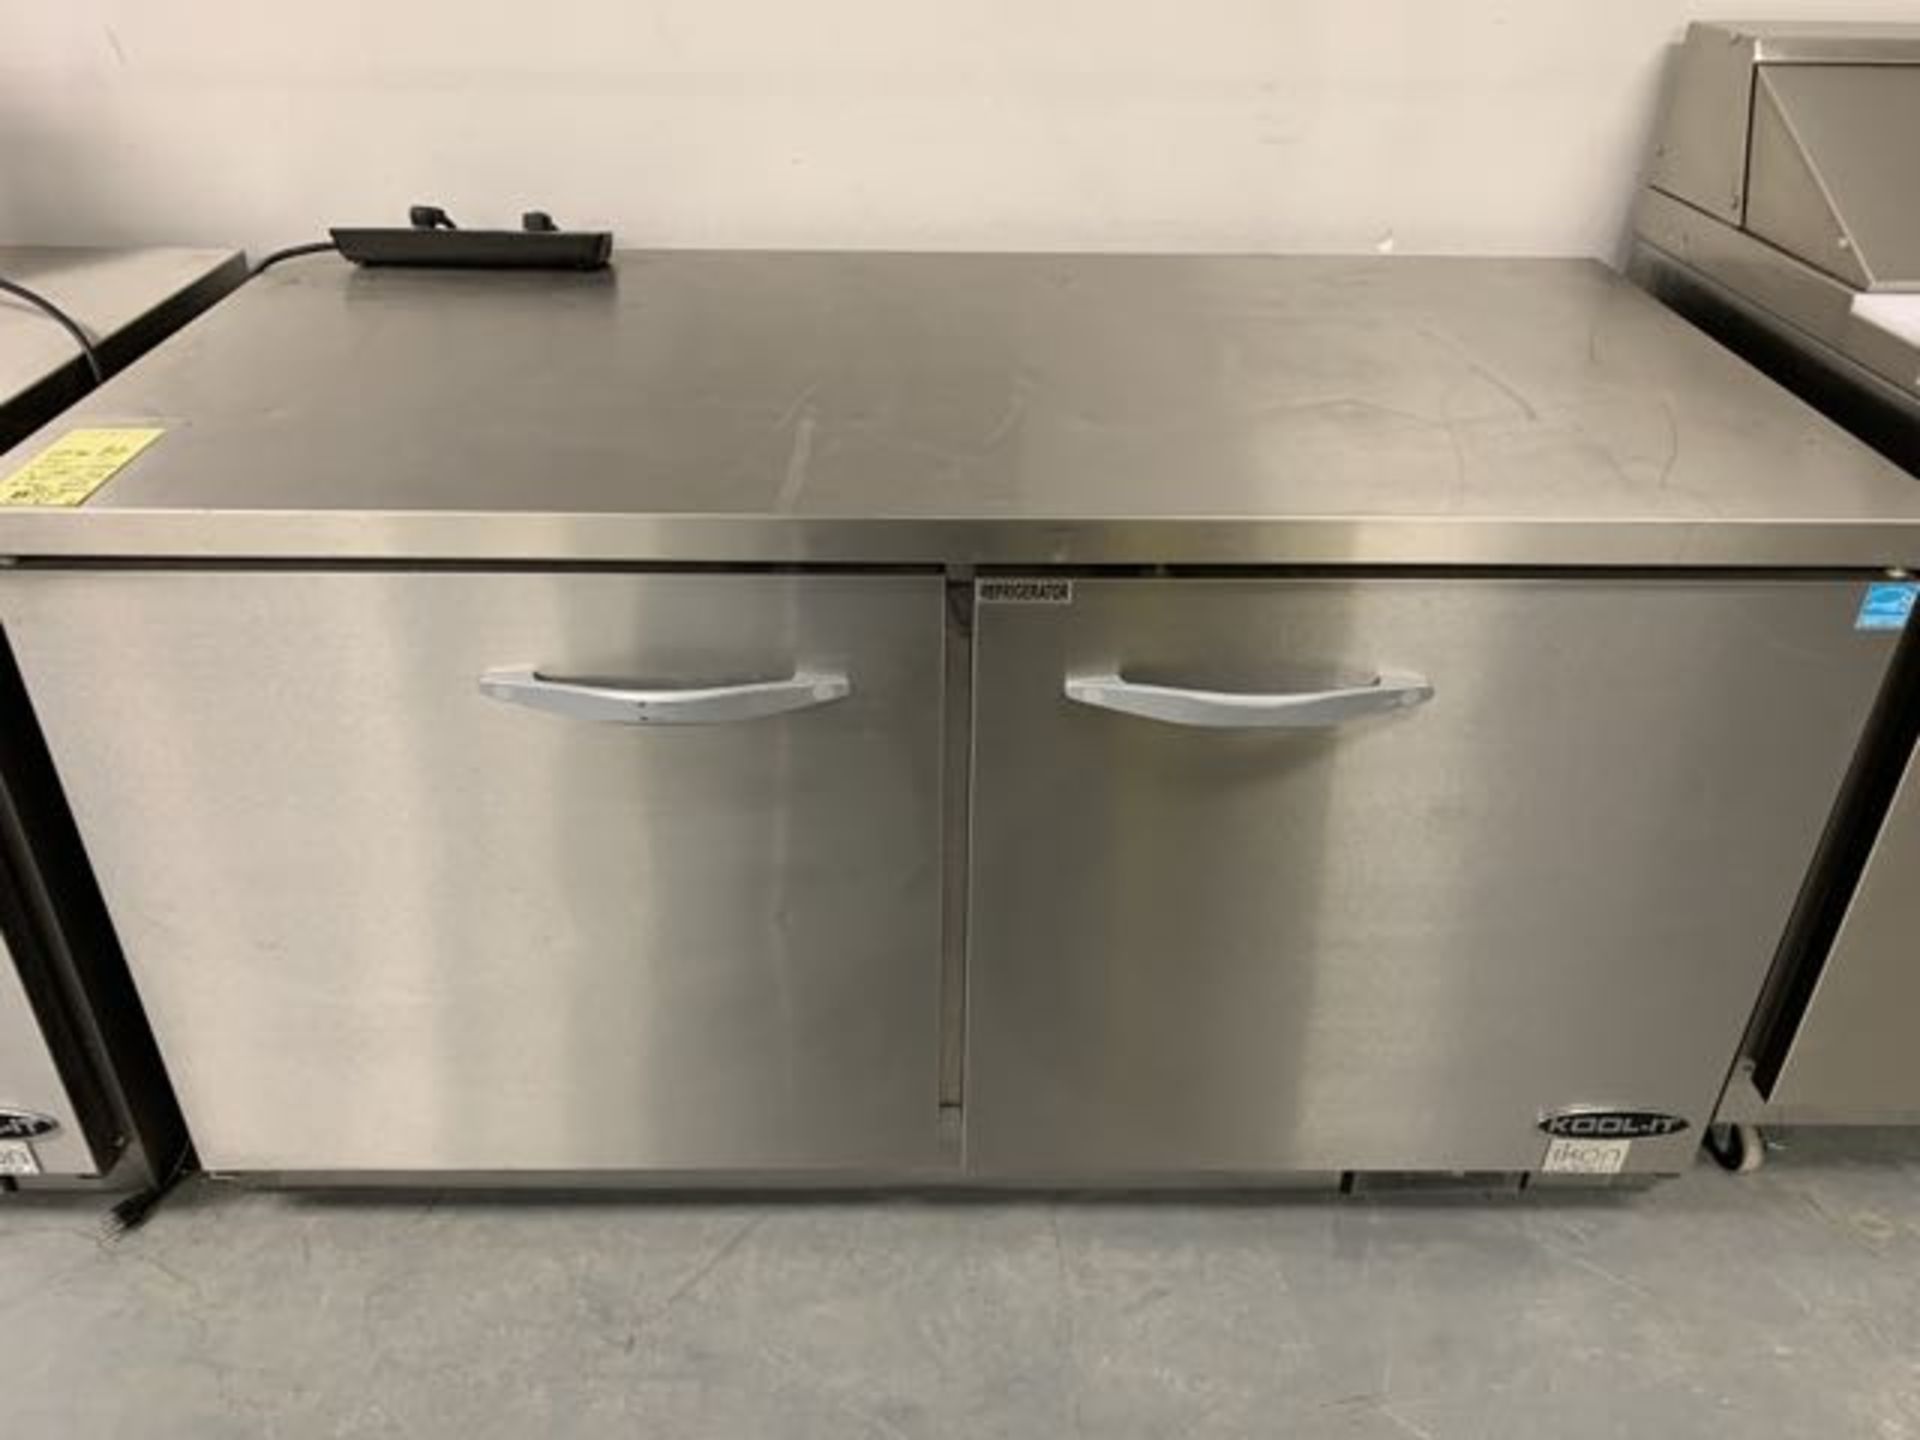 Réfrigérateur KOOL IT , 2portes, sous comptoir IKON series # KUC 60A-1A - 60 x 30"